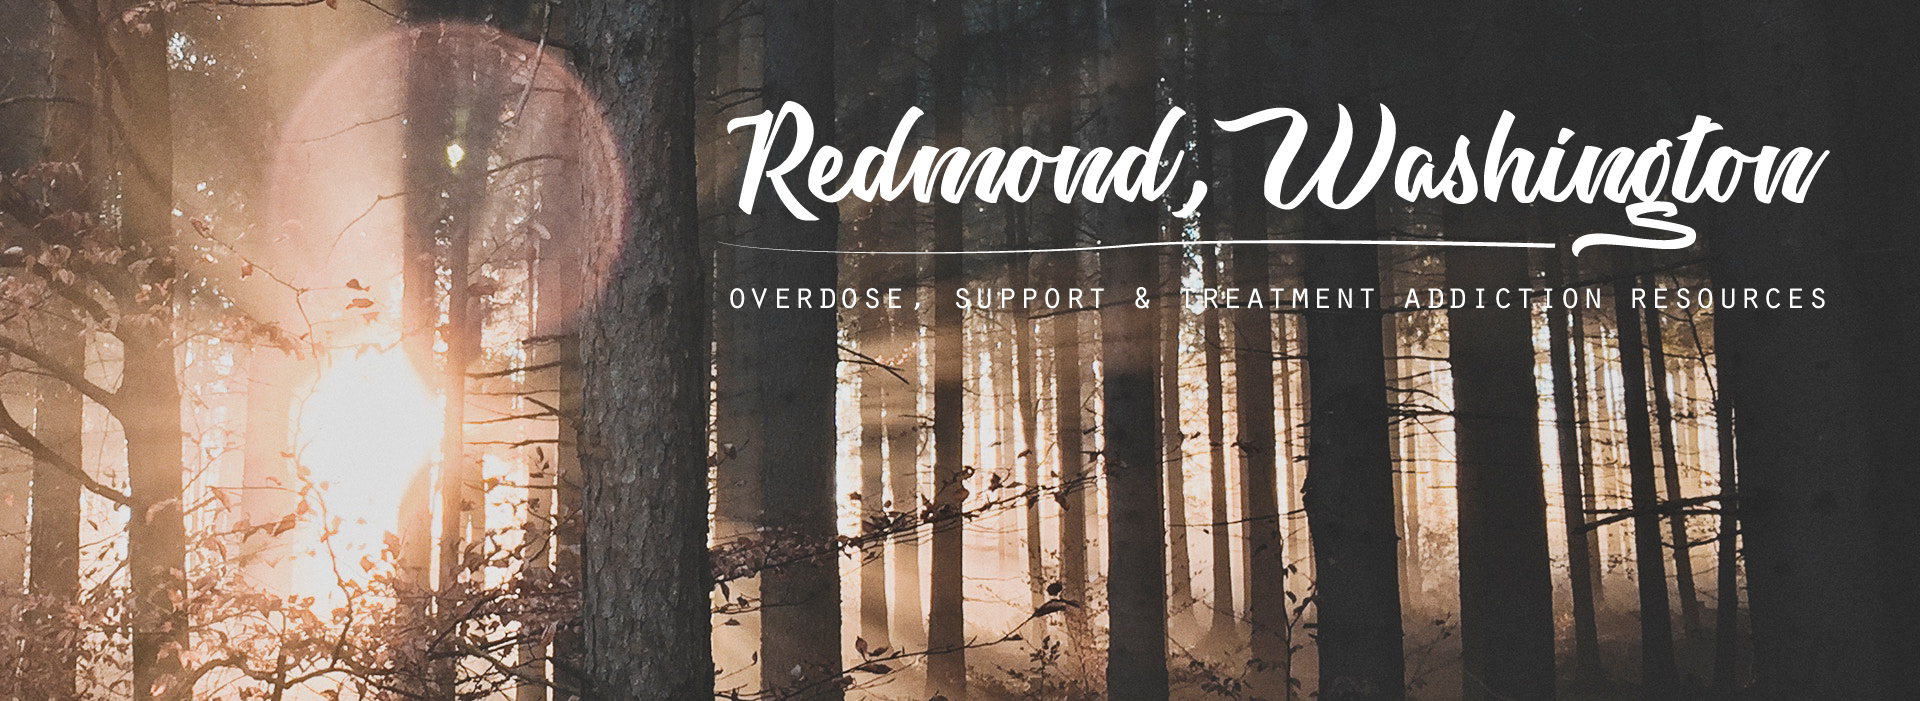 Redmond, Washington, Overdose, Support and treatment addiction resources